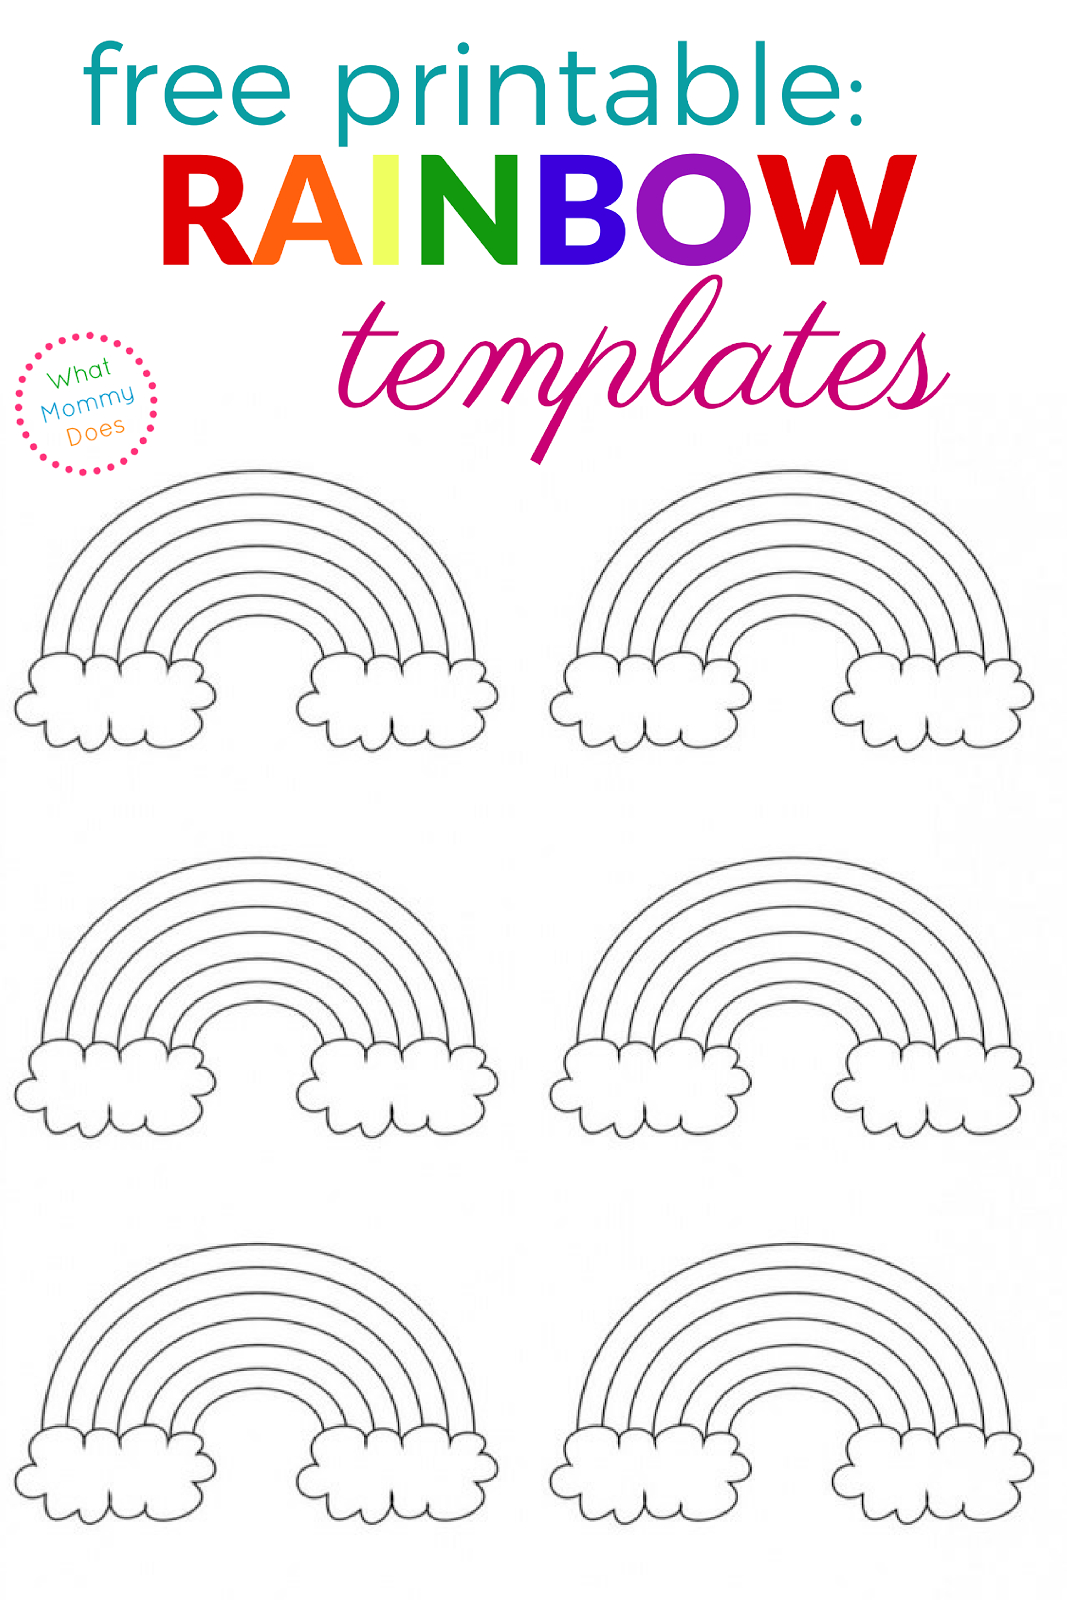 Free Printable Rainbow Templates – Large, Medium &amp;amp; Small Patterns - Free Printable Crafts